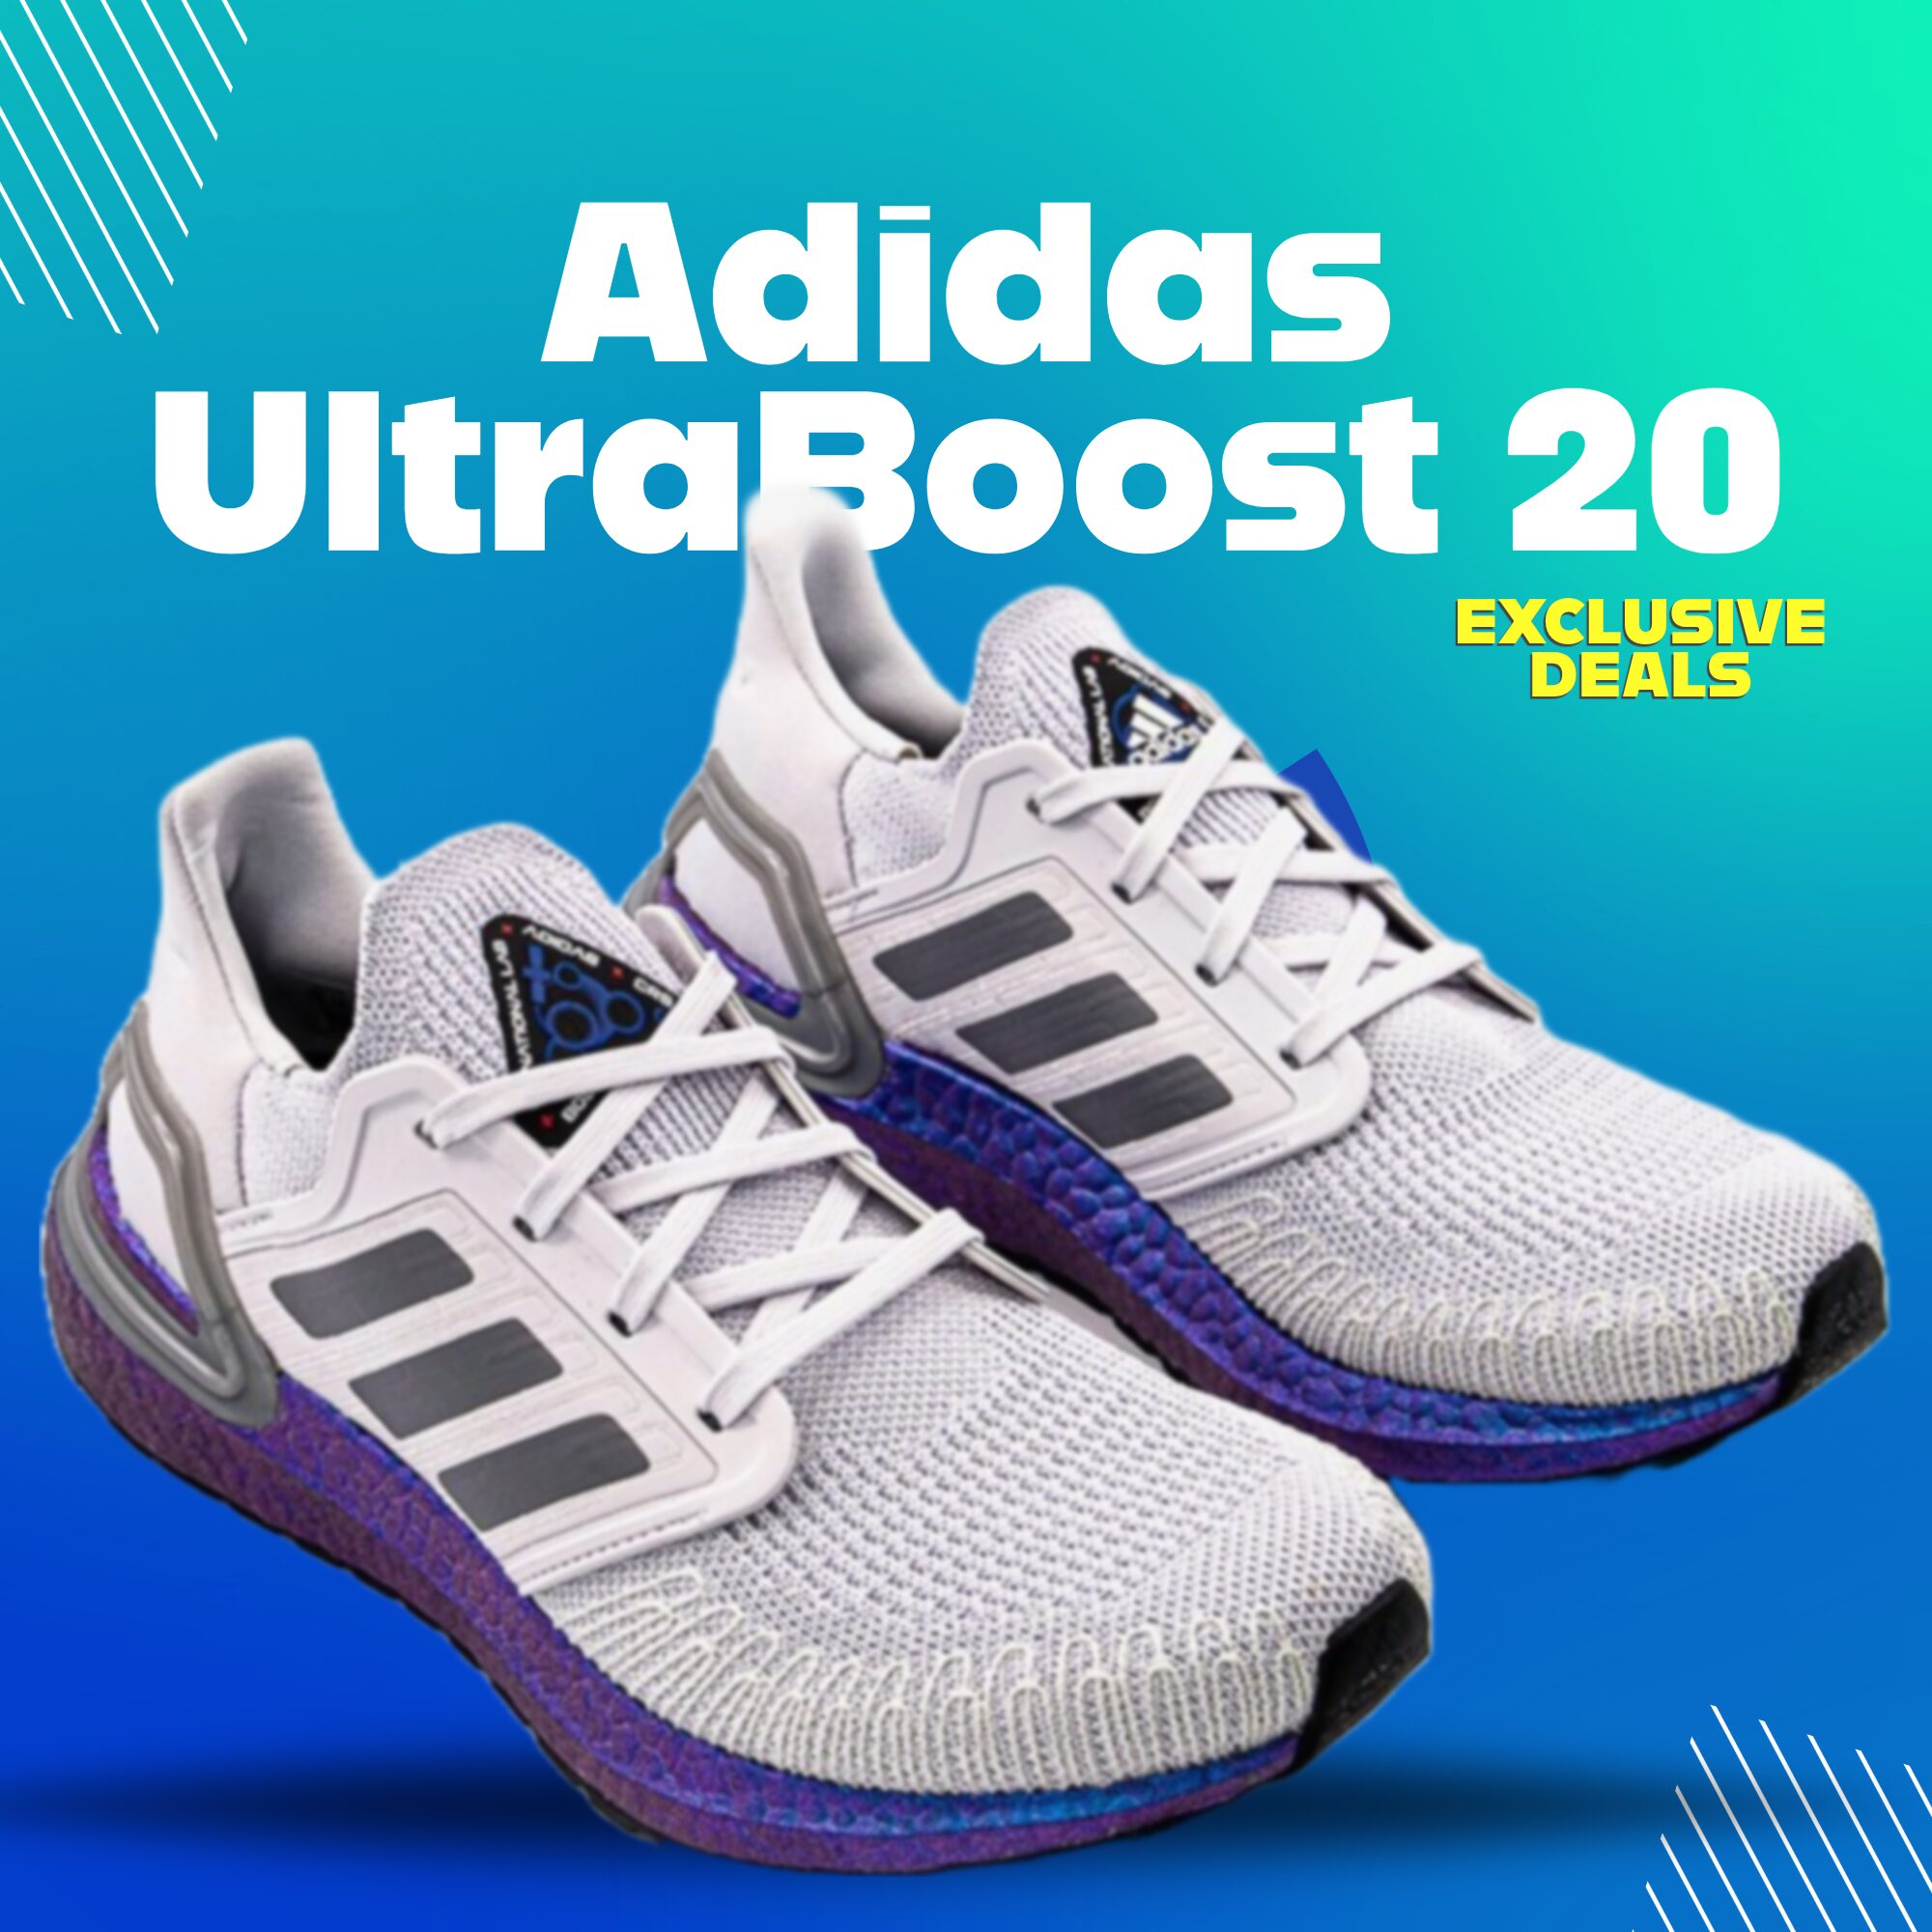 adidas-ultra-boost-20-running-shoe.jpg